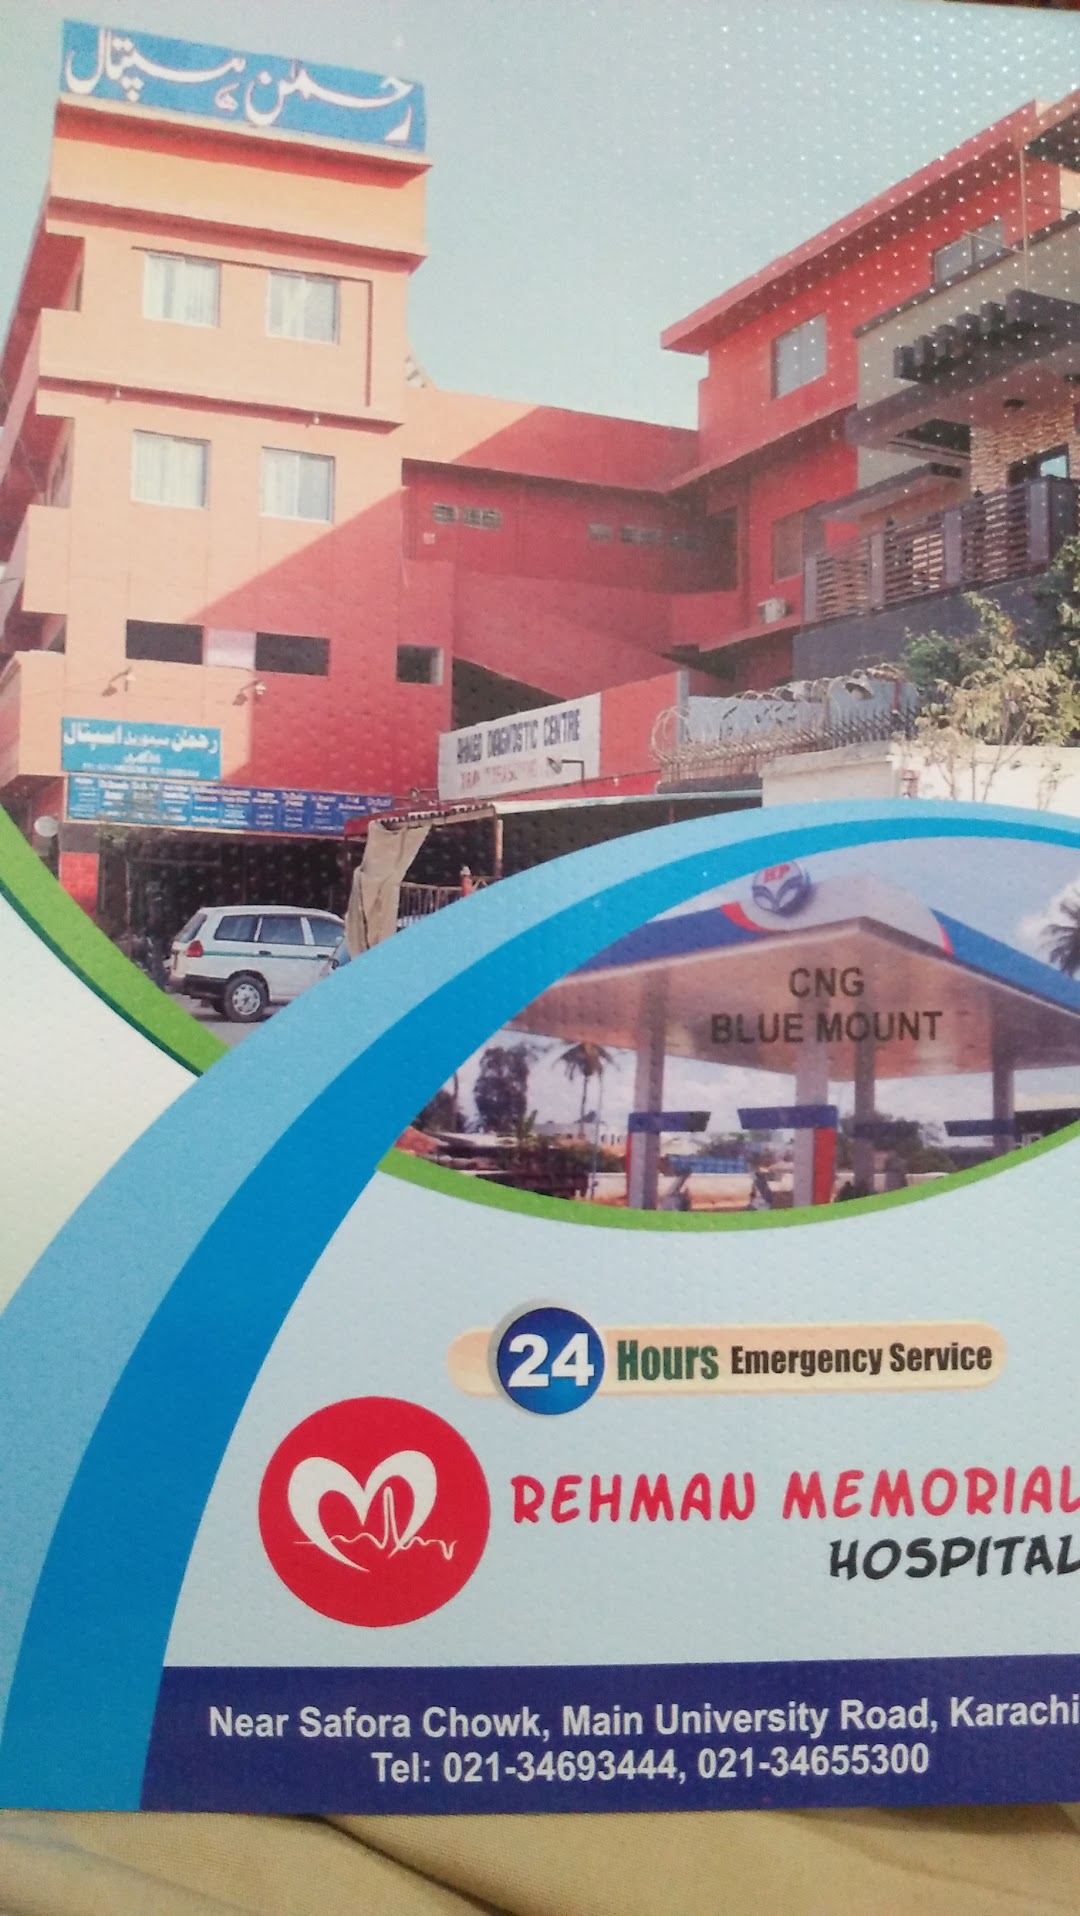 Rehman Memorial Hospital